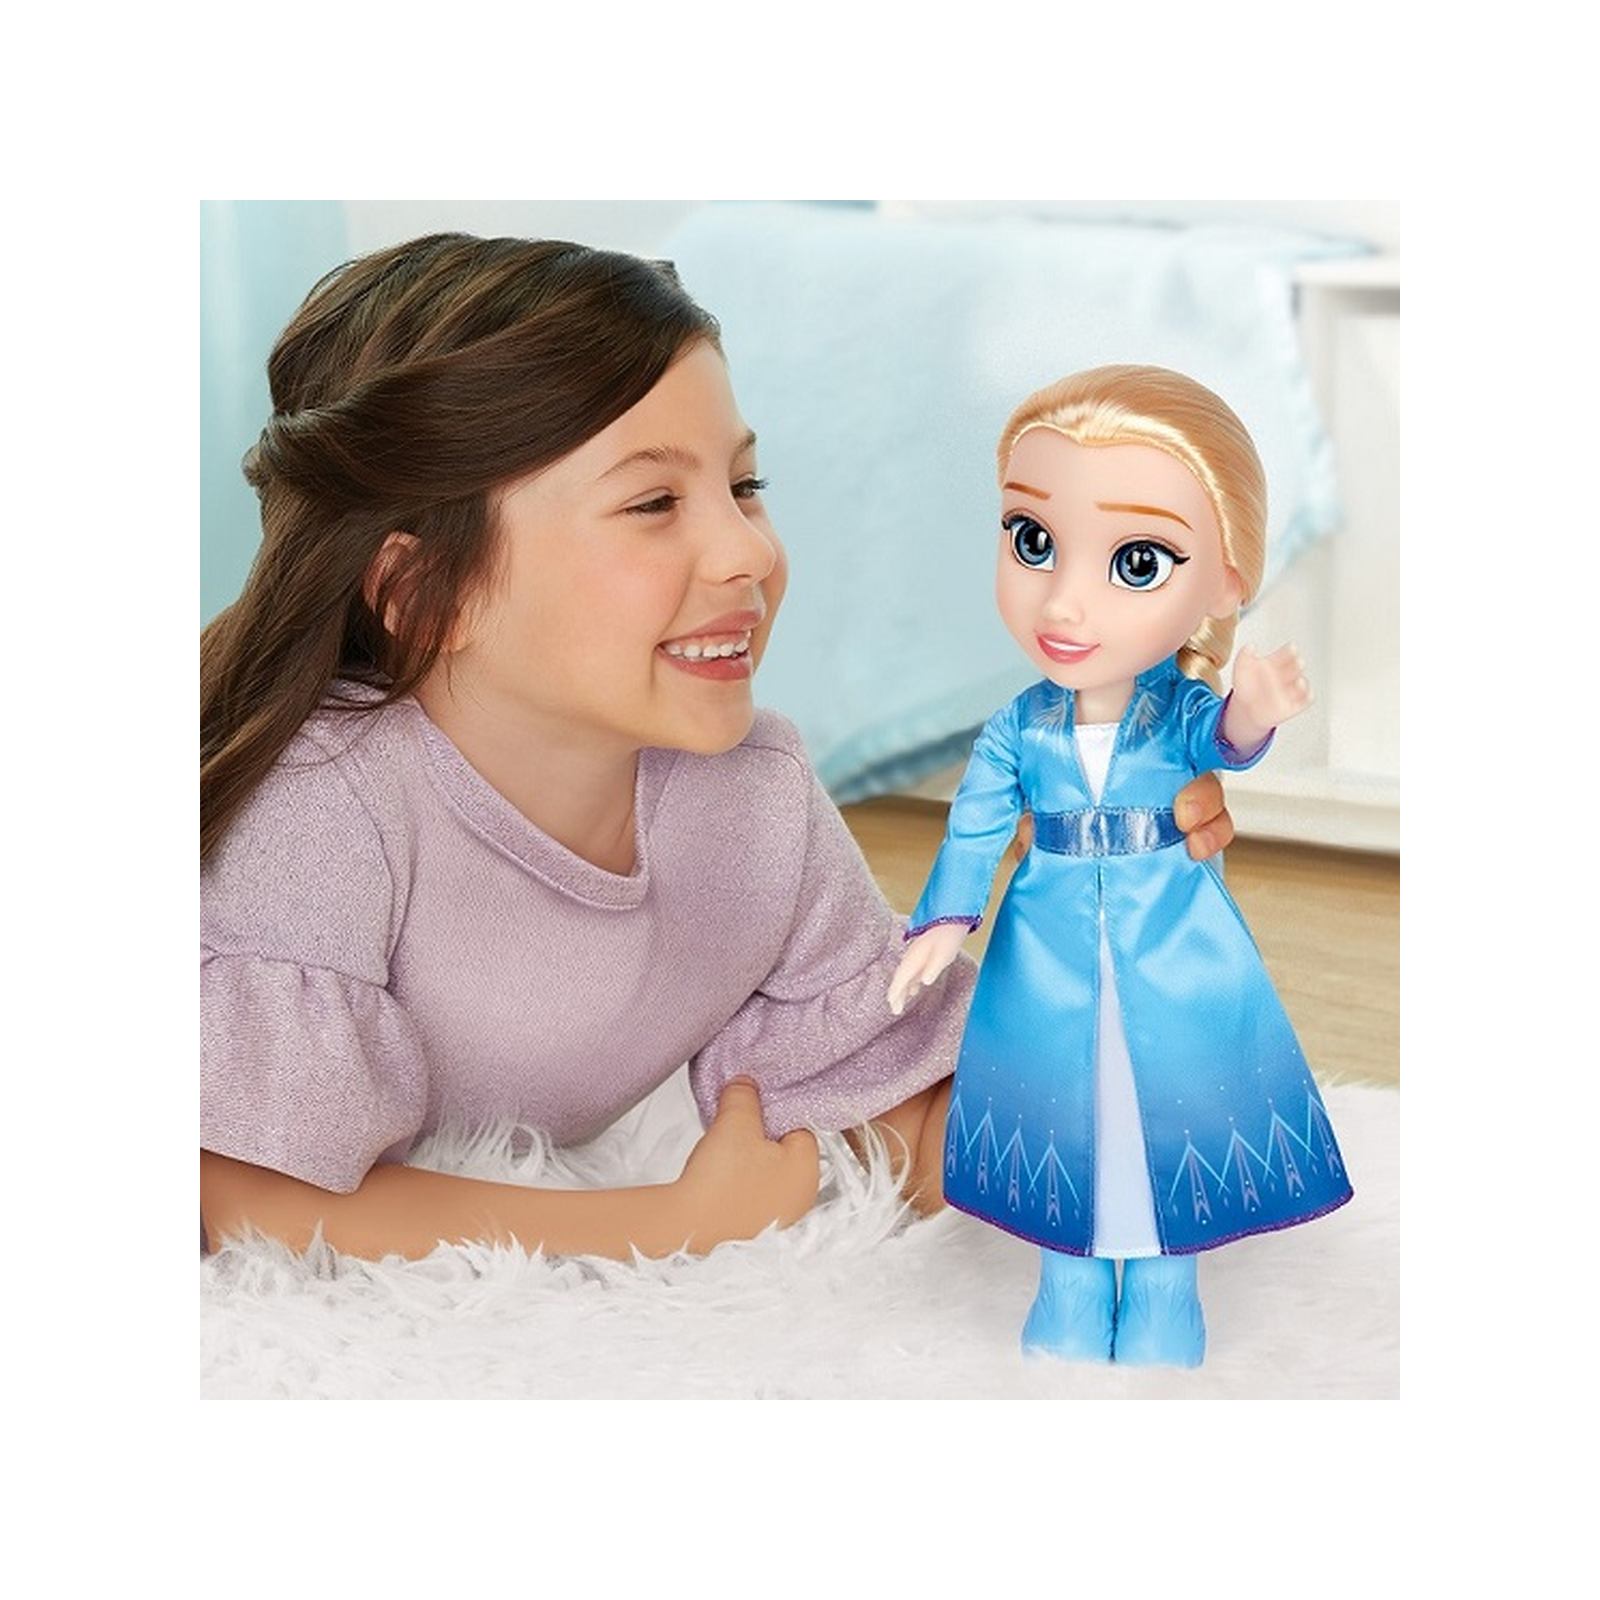 Frozen 2 bambola elsa adventure 38 cm. con abito e scarpette e occhi scintillanti - DISNEY PRINCESS, Frozen